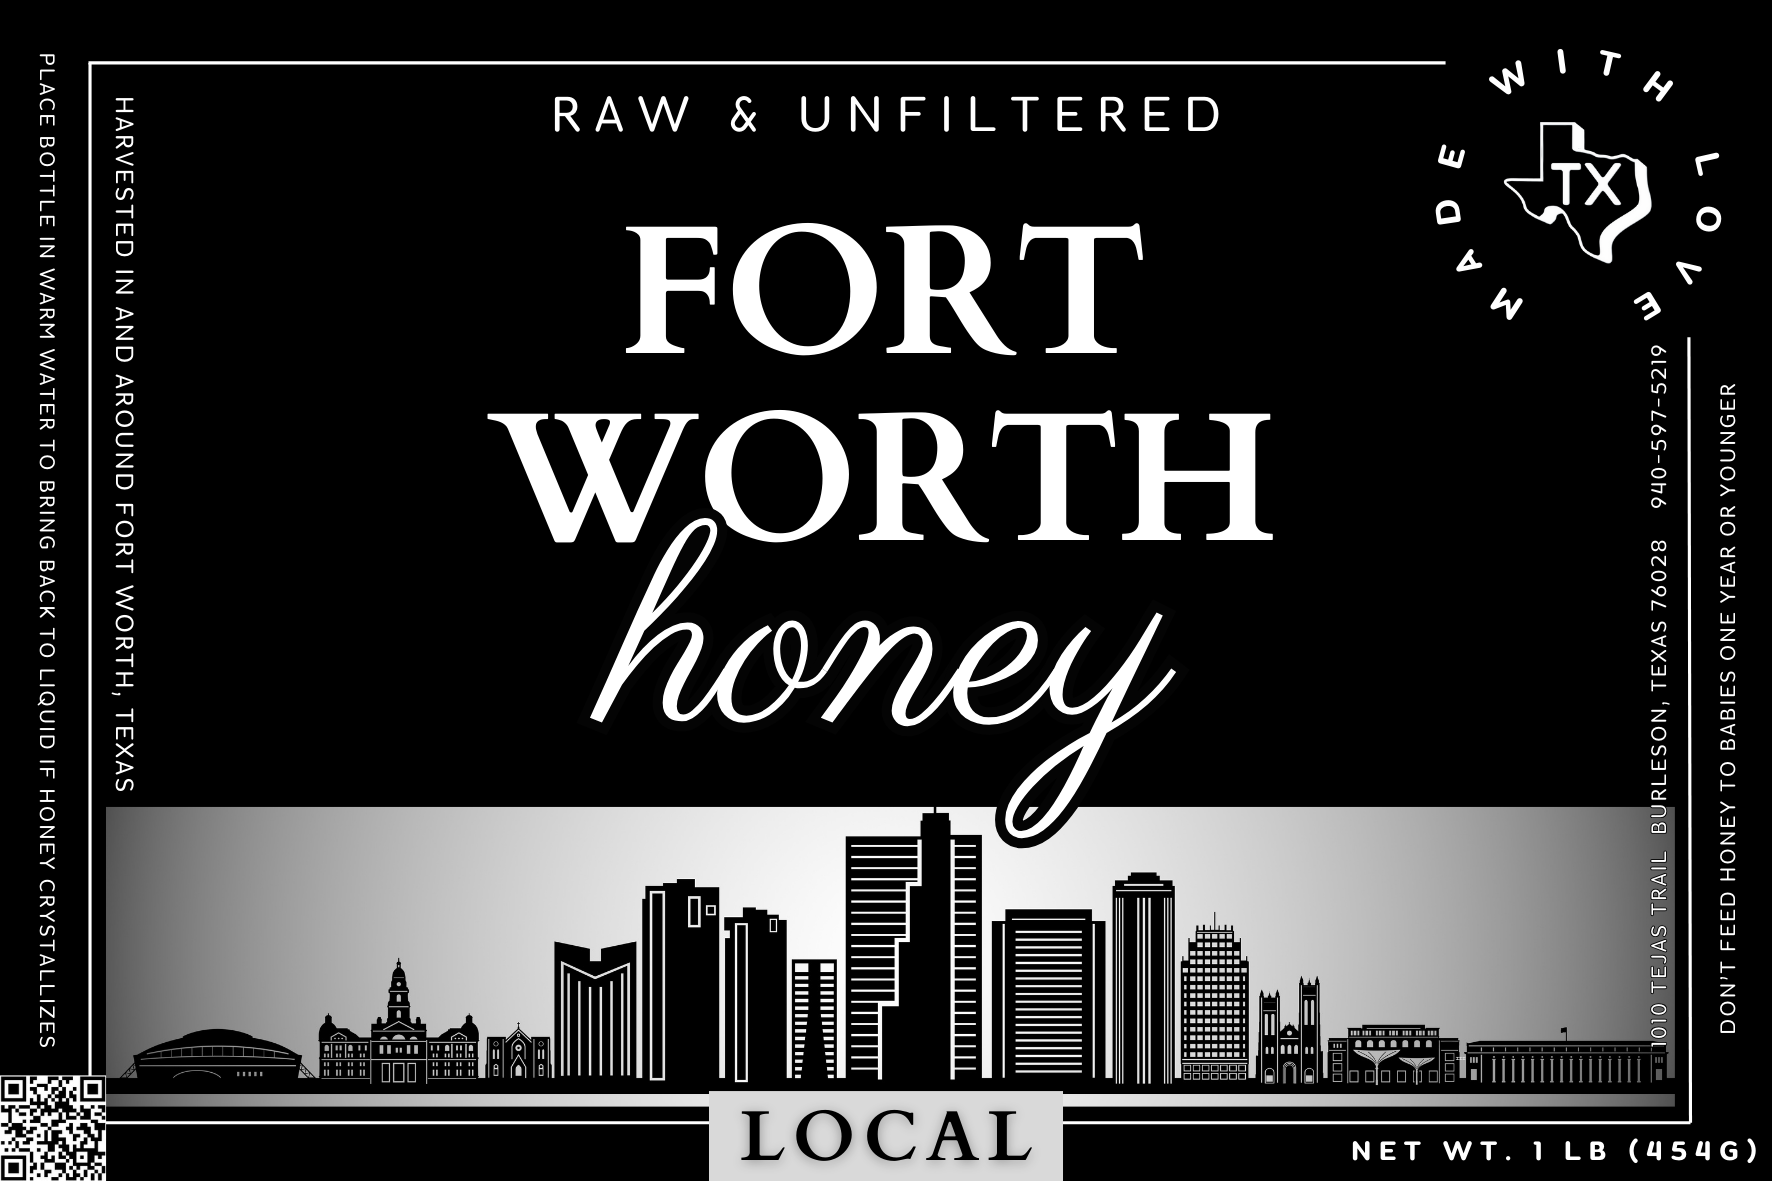 Local Fort Worth Honey - North Texas Wildflower